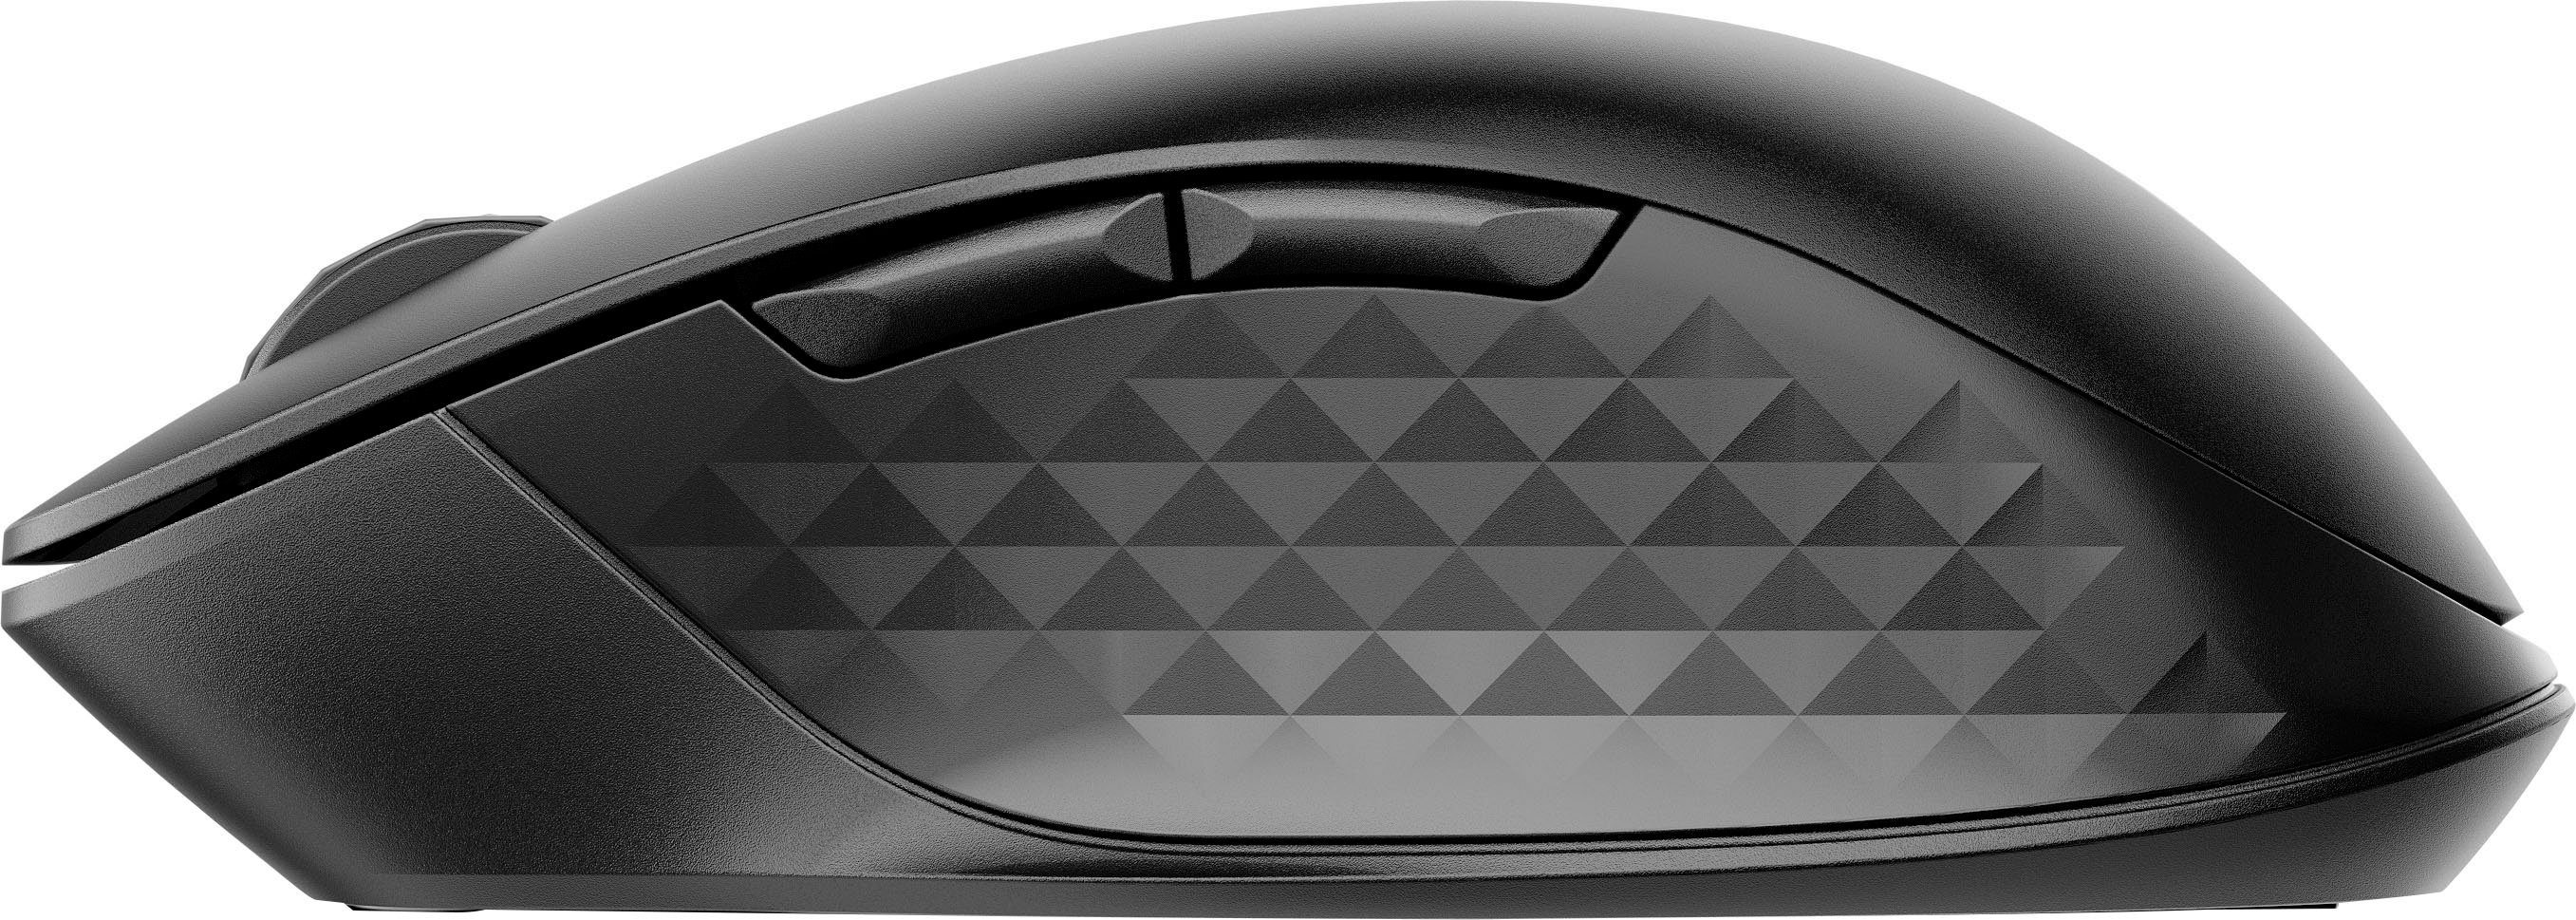 Maus (Bluetooth) HP 430